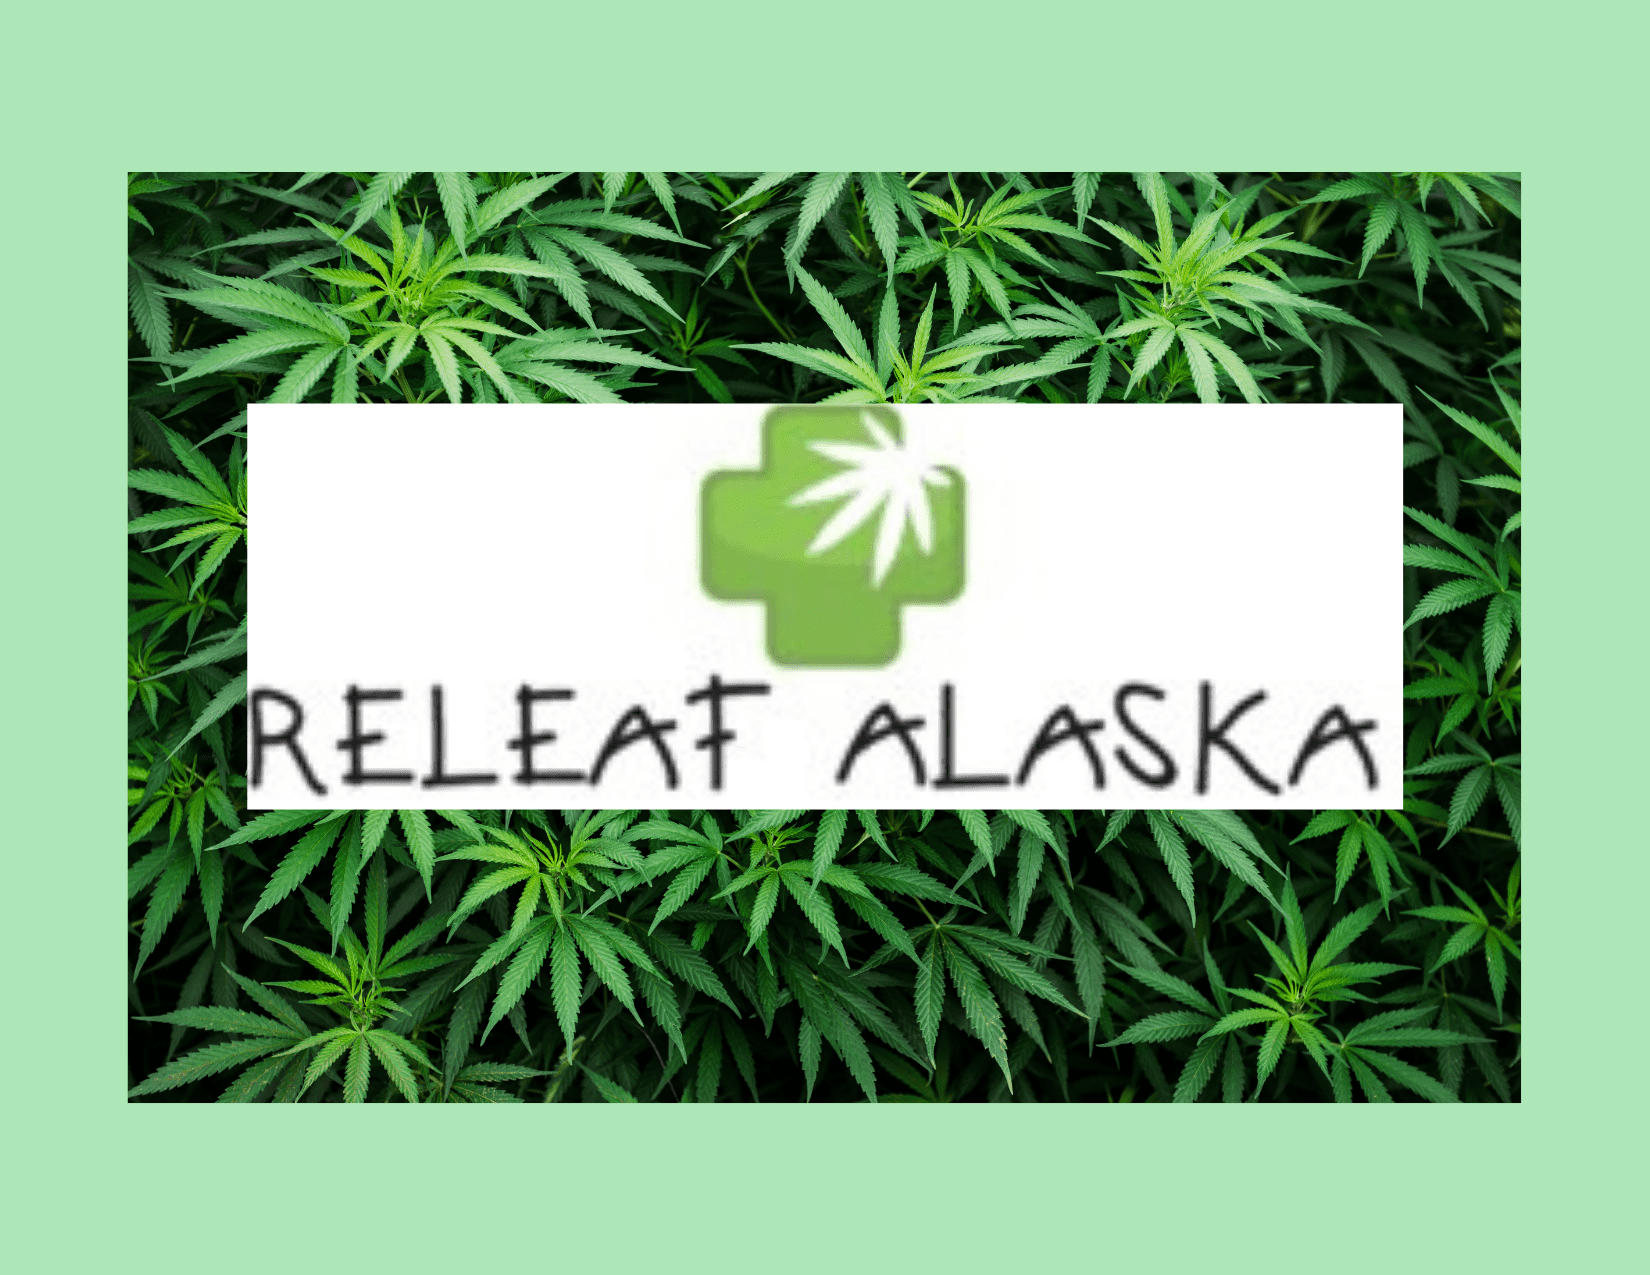 Releaf Alaska